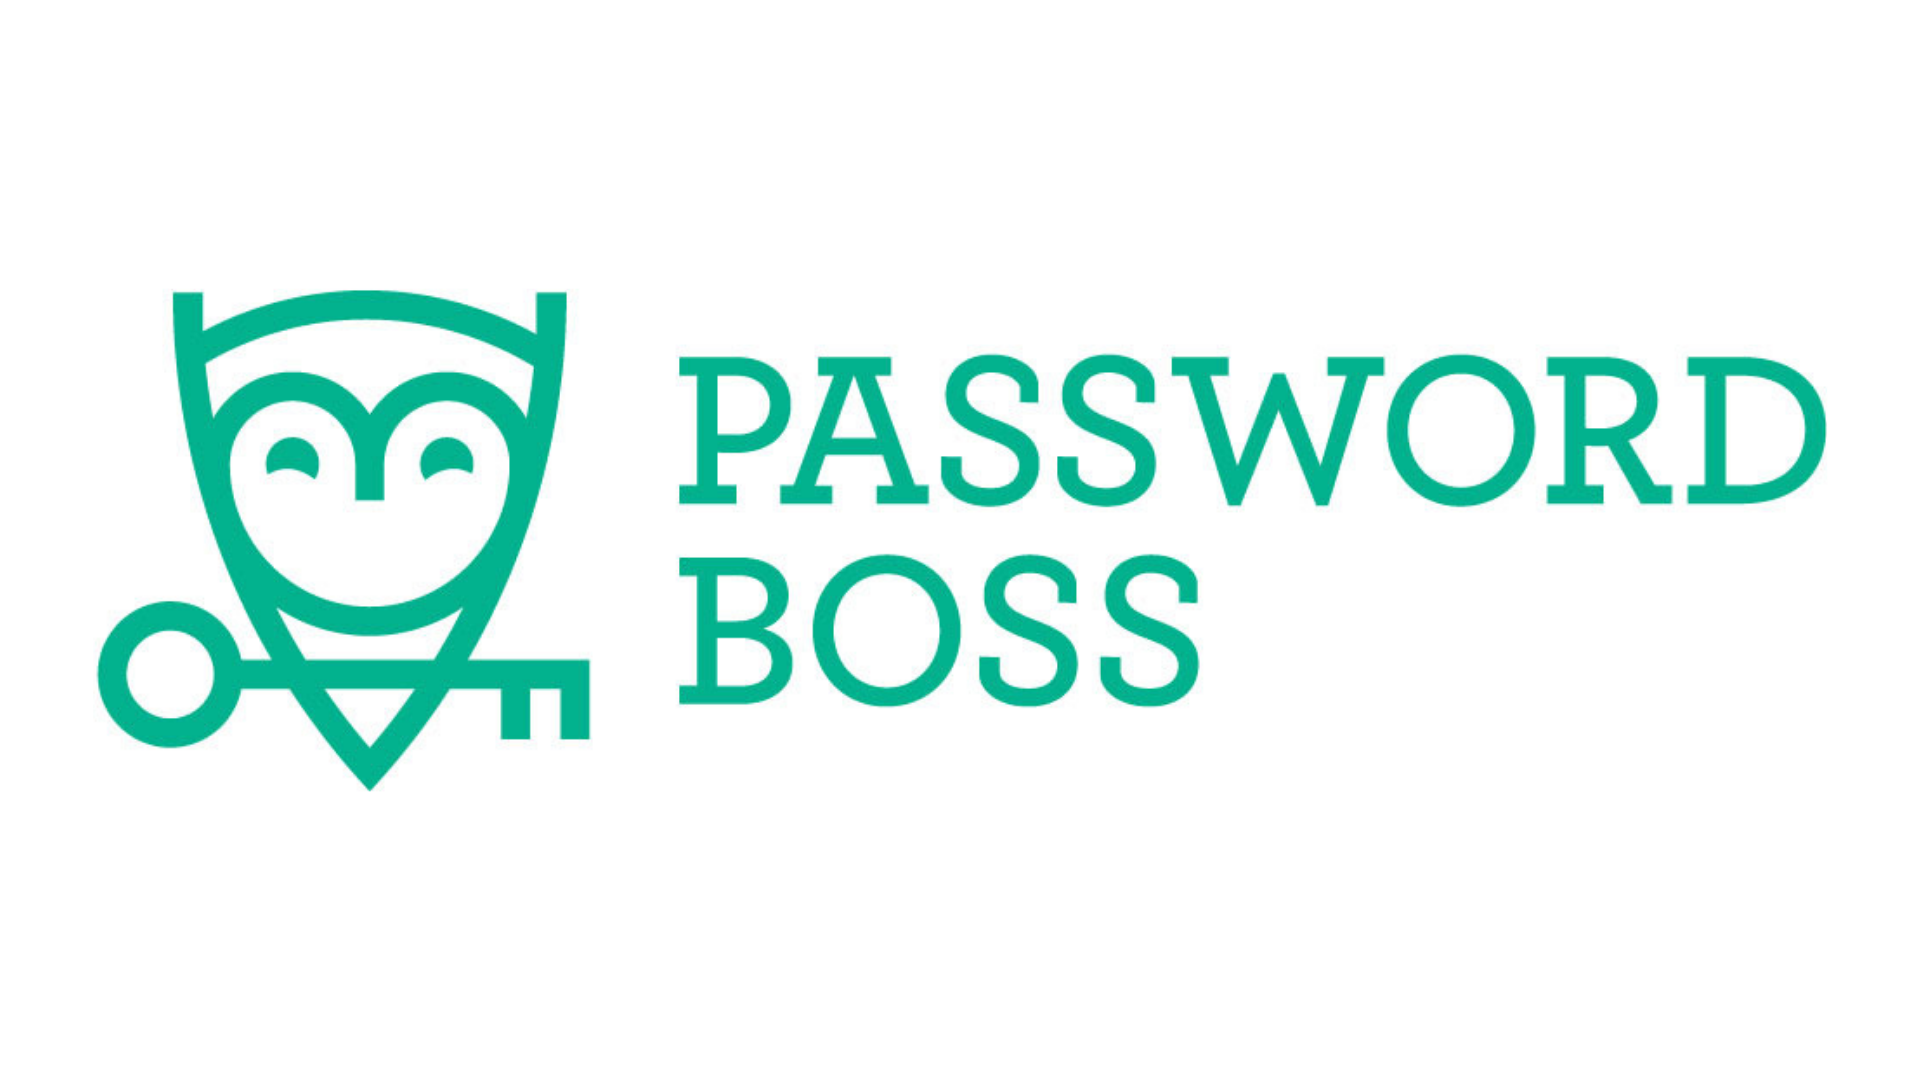 Password Boss. We our boss